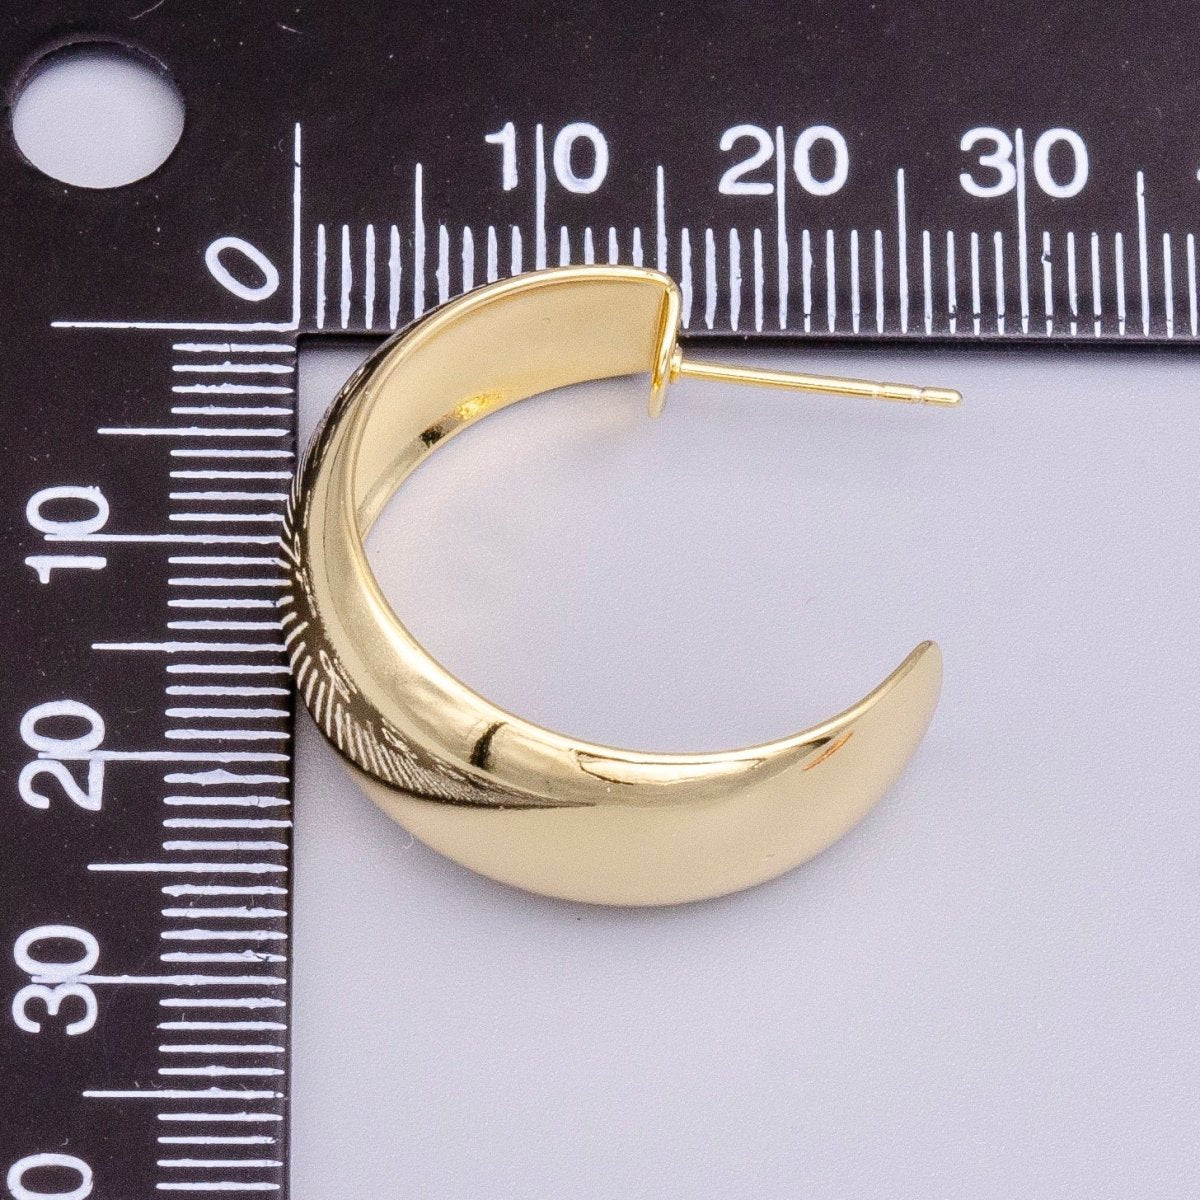 14K Gold Filled 27mm Wide Thin Dome C-Shaped Geometric Hoop Earrings | AE070 - DLUXCA